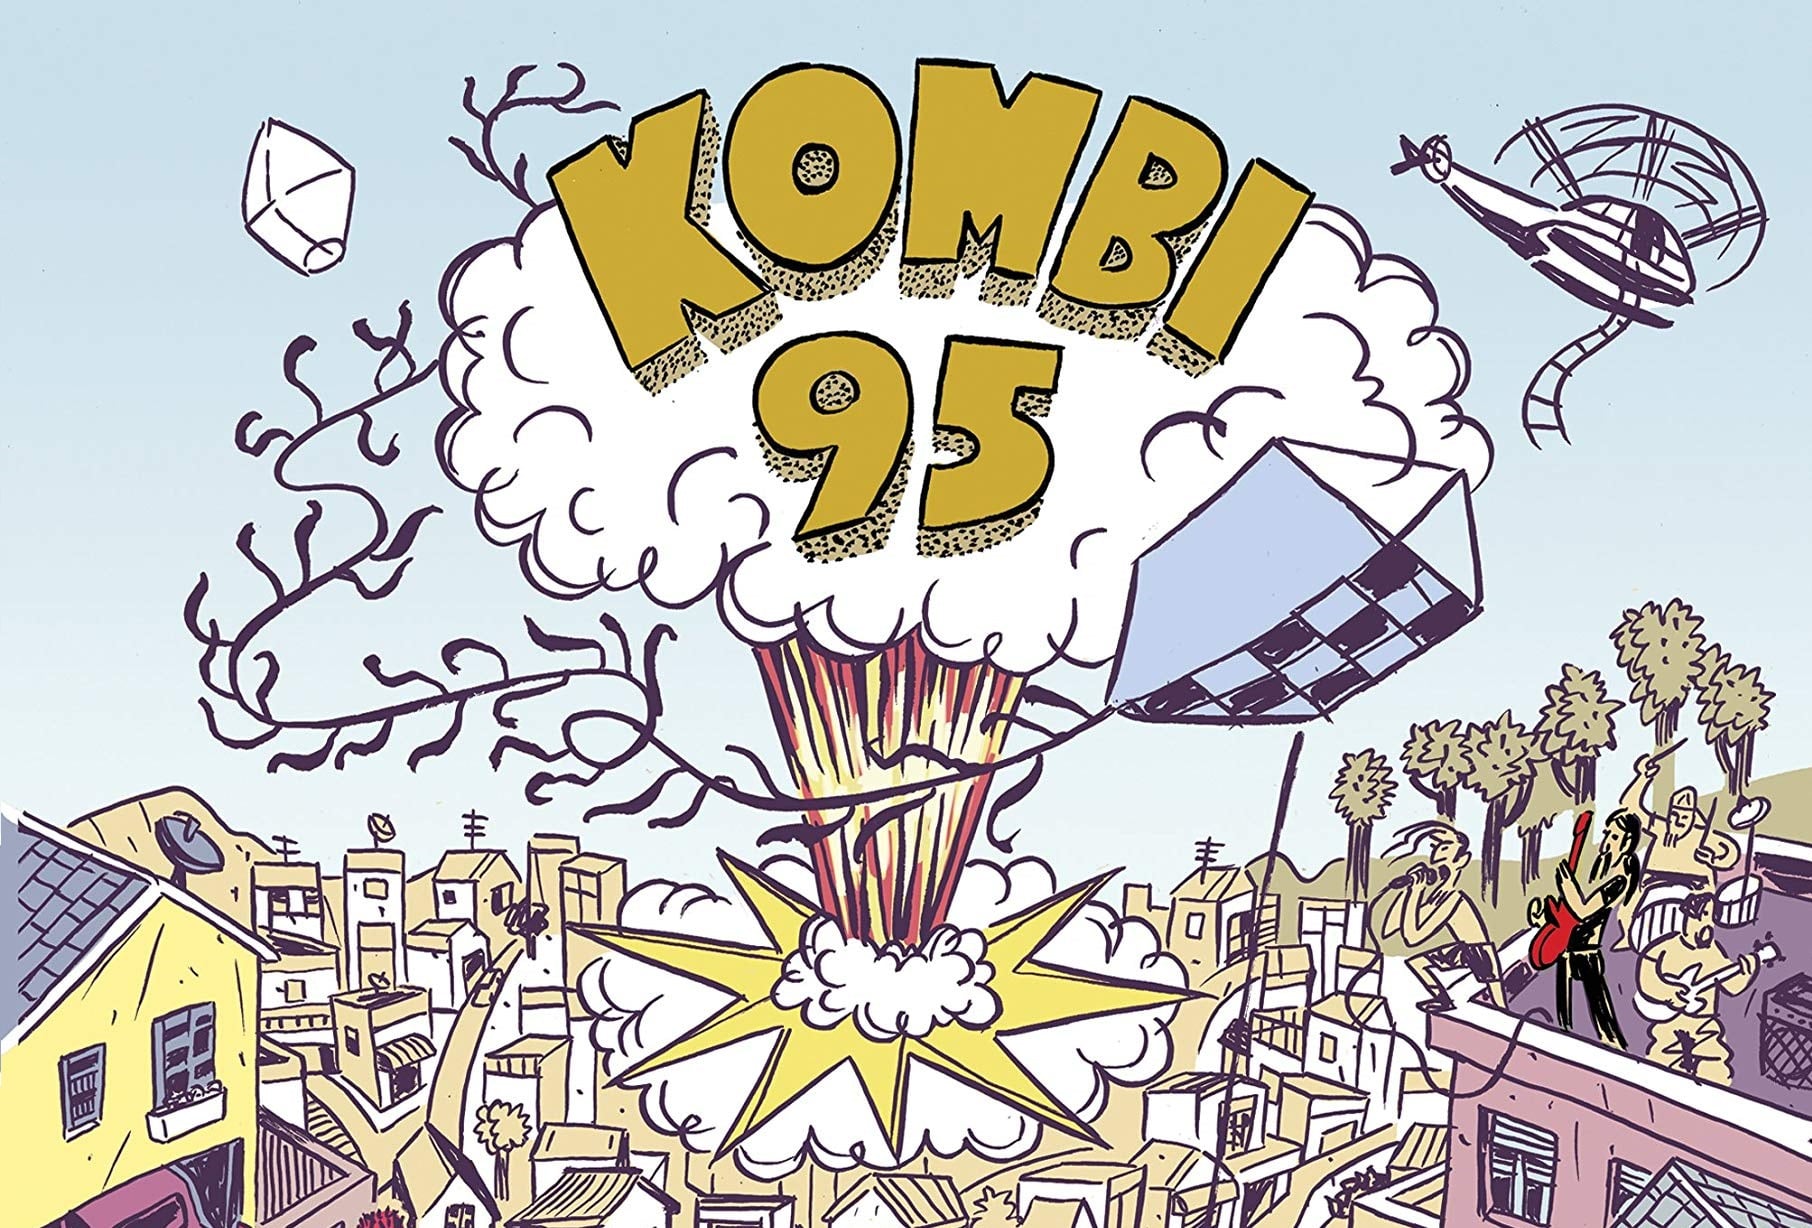 Kombi 95 (2017) – O Ultimato